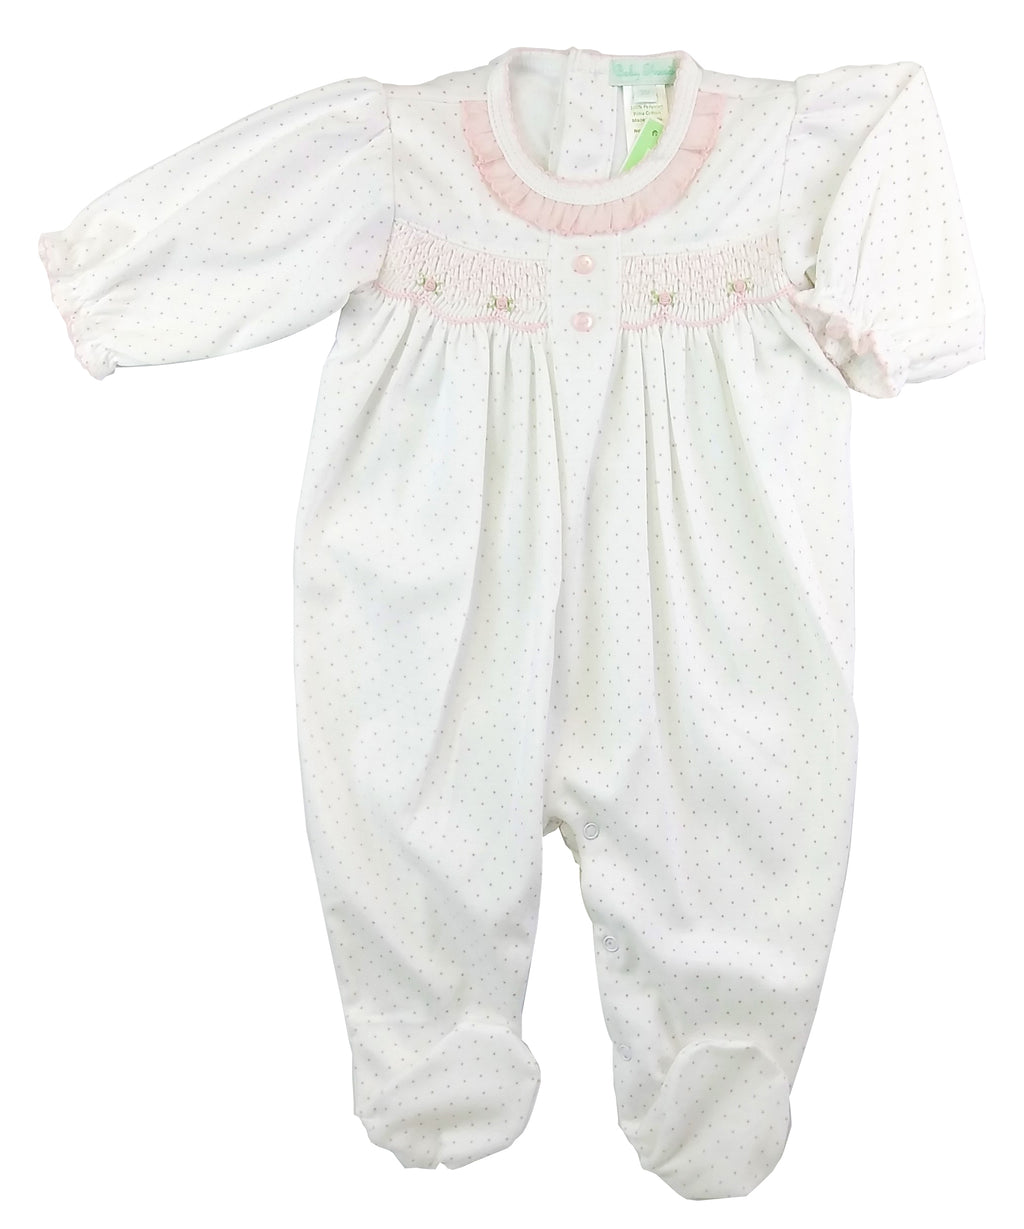 Baby Girl's Polka Dot Smocked Footie - Little Threads Inc. Children's Clothing